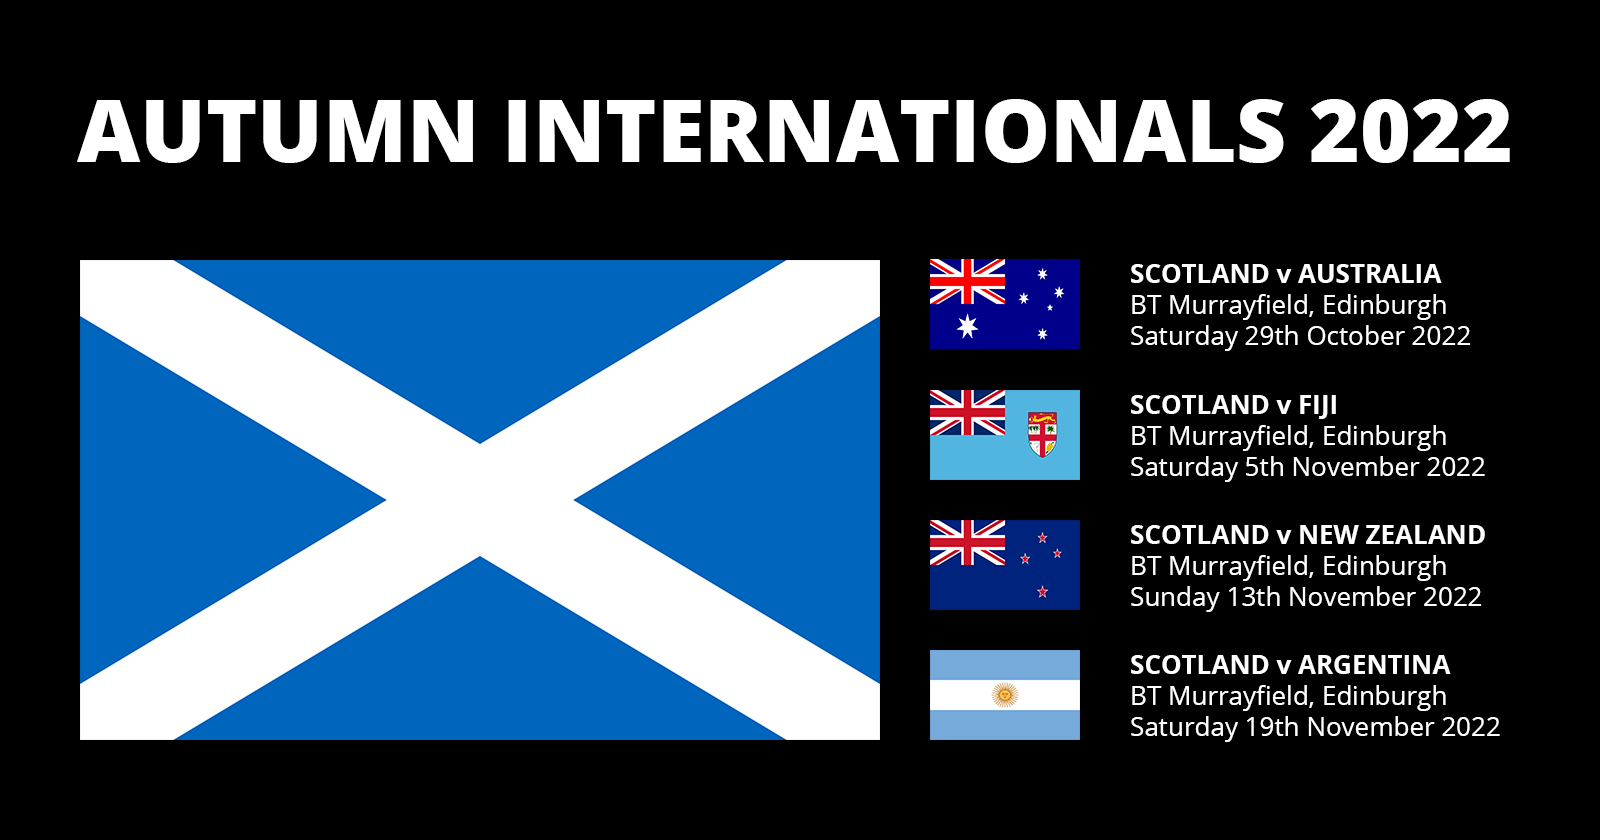 Scotland Autumn Internationals 2022 Rugby Fixtures